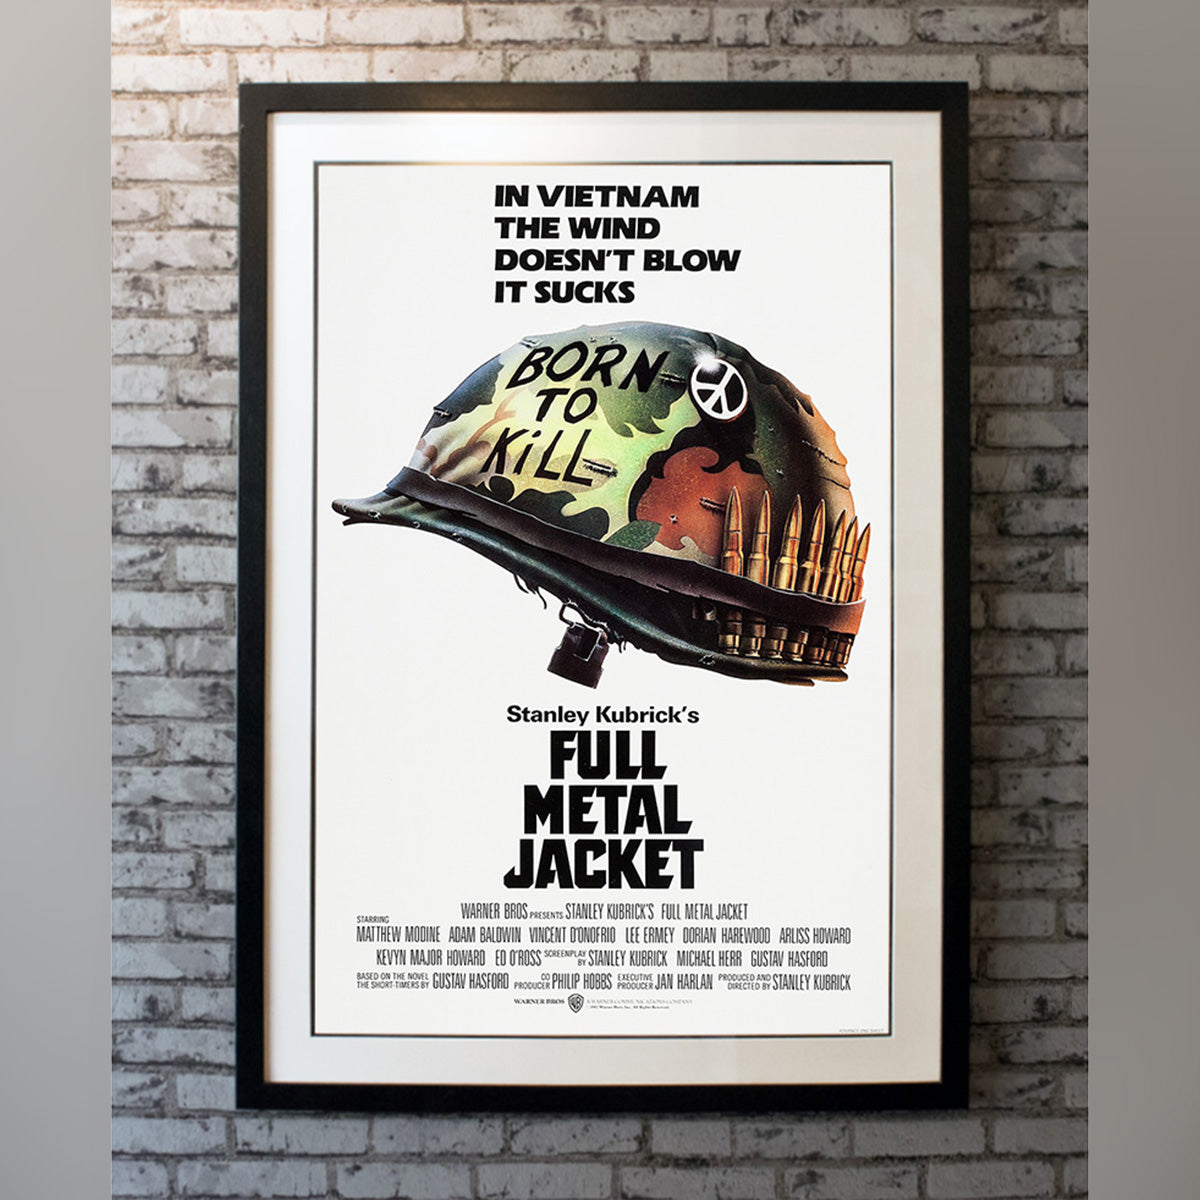 Original Movie Poster of Full Metal Jacket (1987)